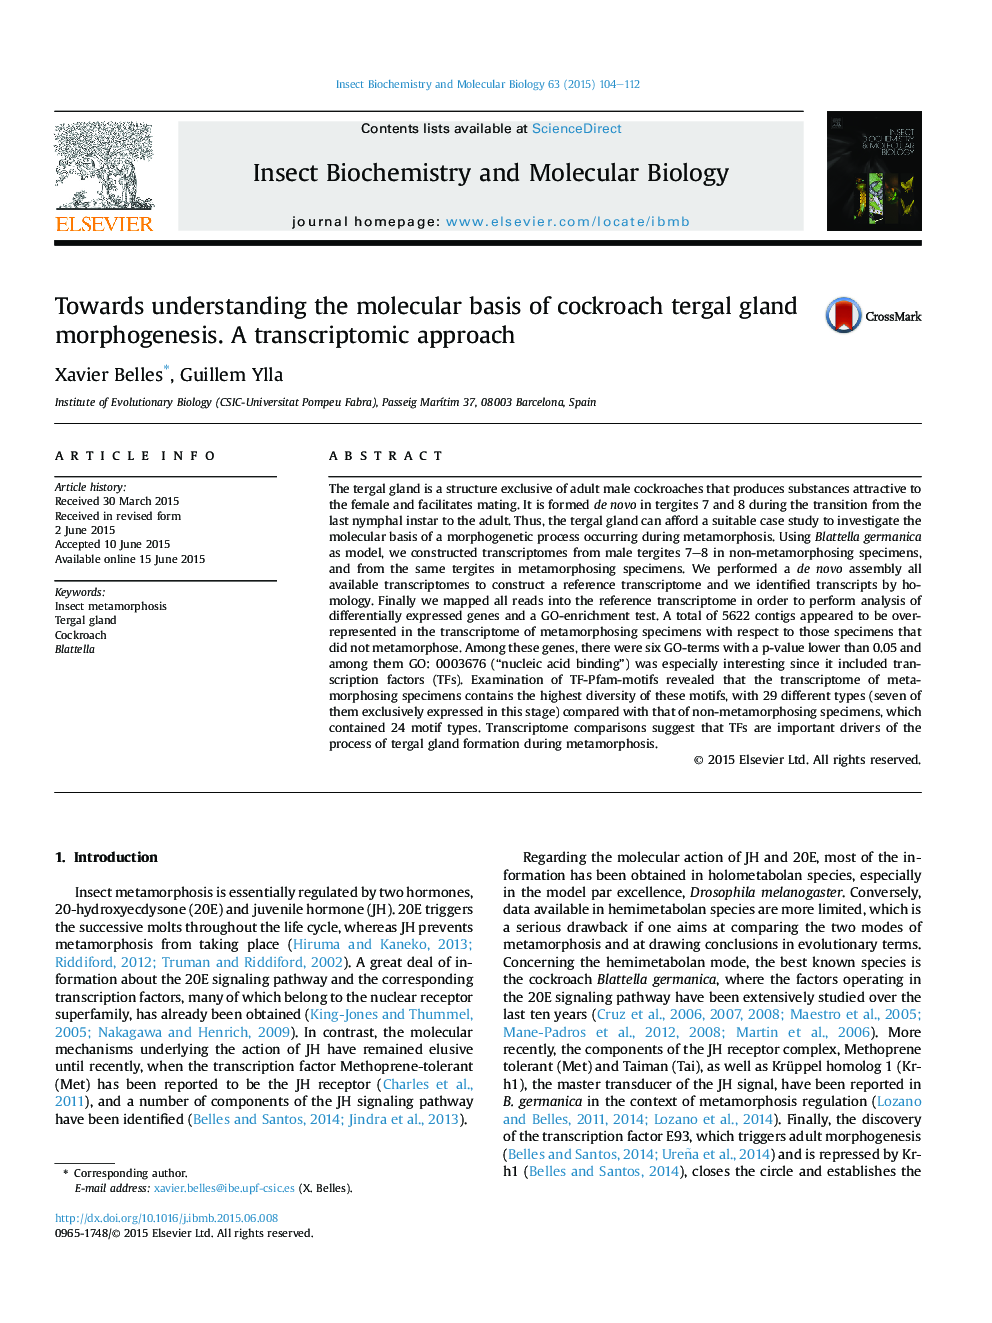 Towards understanding the molecular basis of cockroach tergal gland morphogenesis. A transcriptomic approach